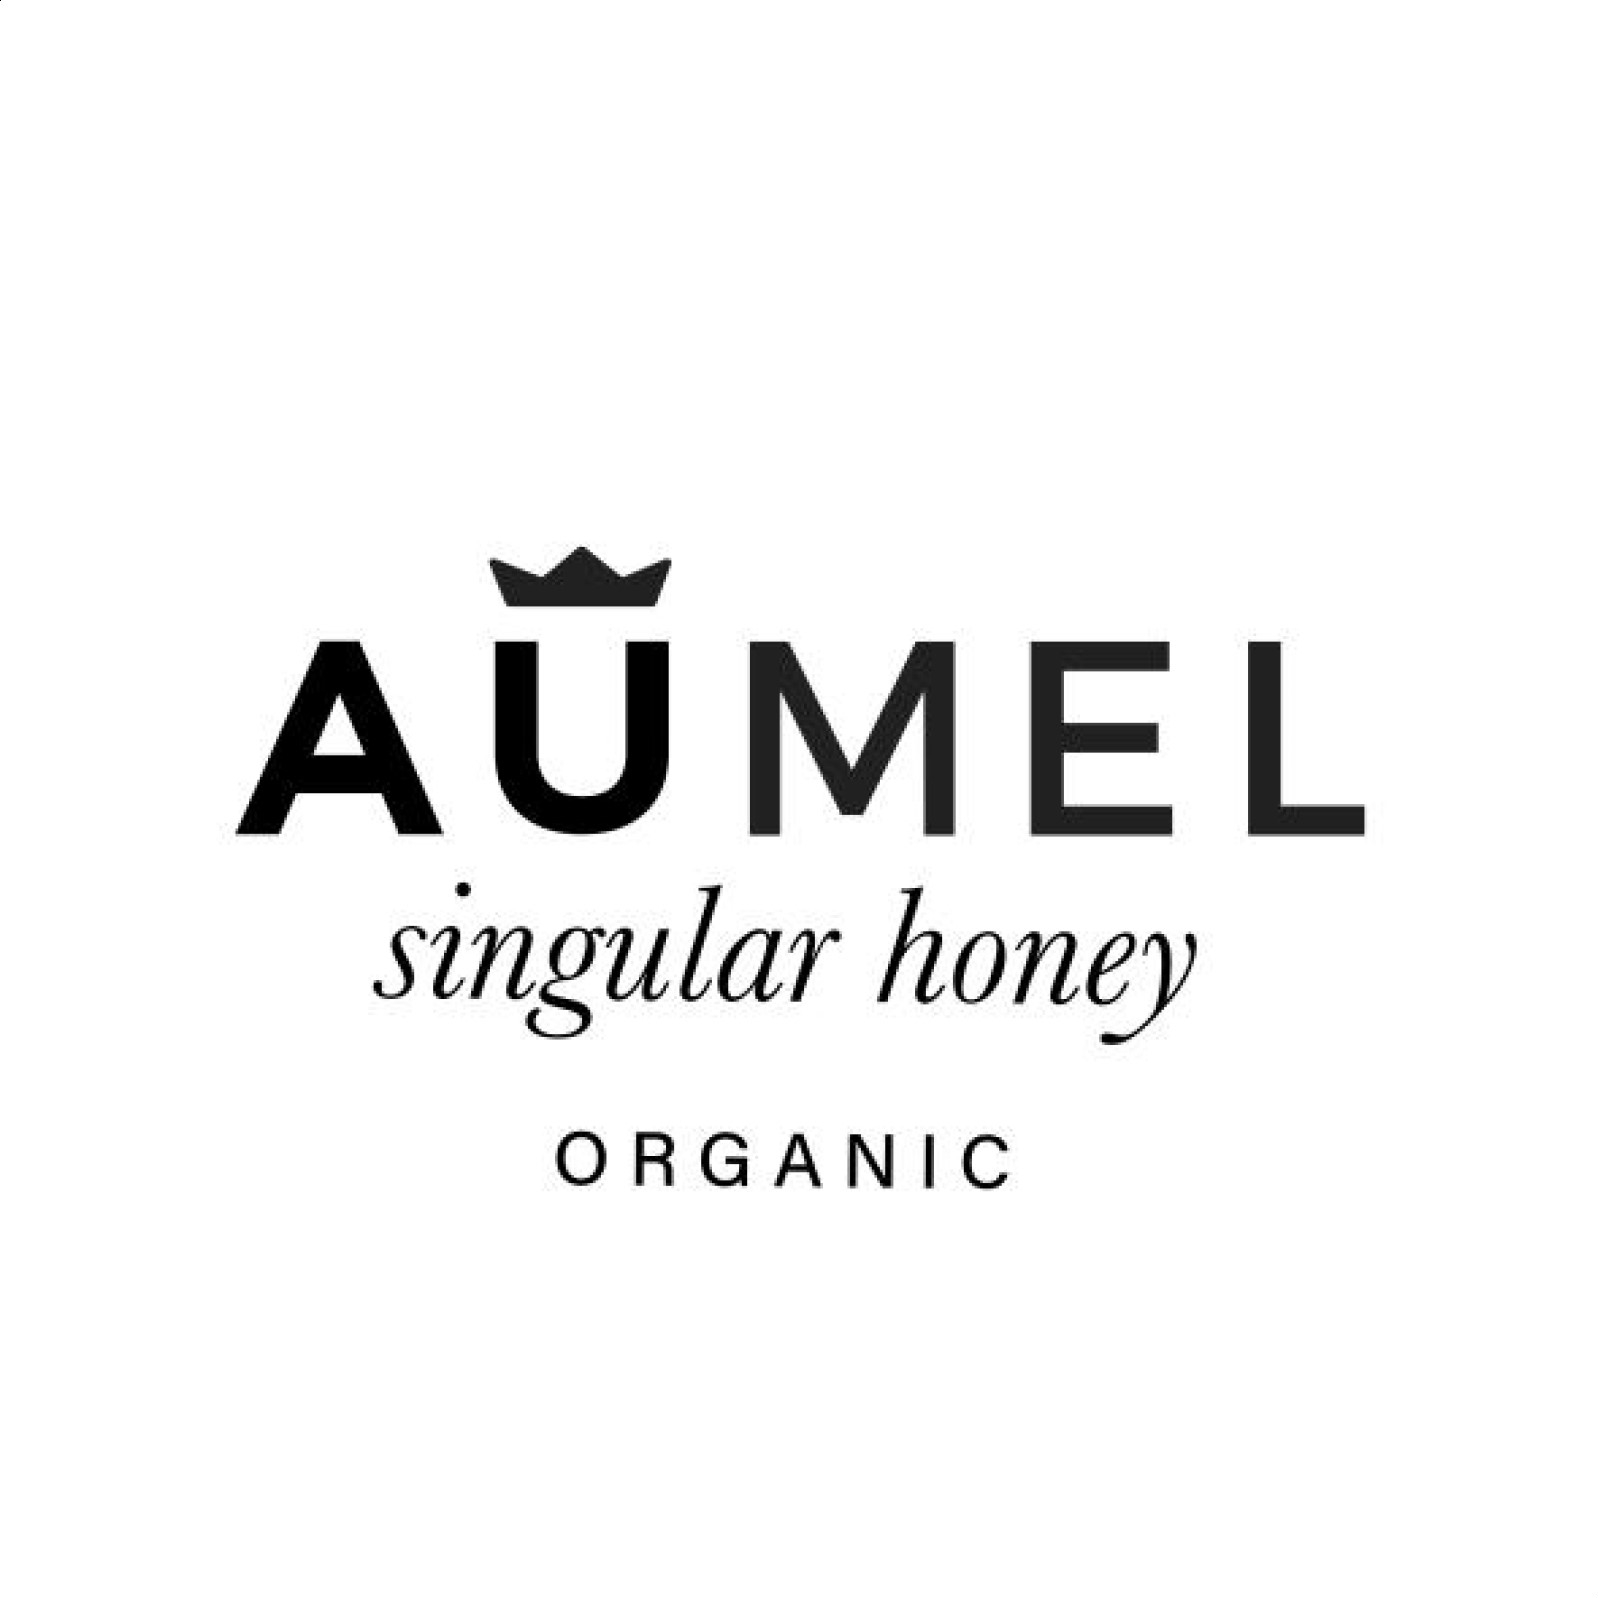 Aumel Organic Honey - Miel de mil flores ecológica 300g, 24uds